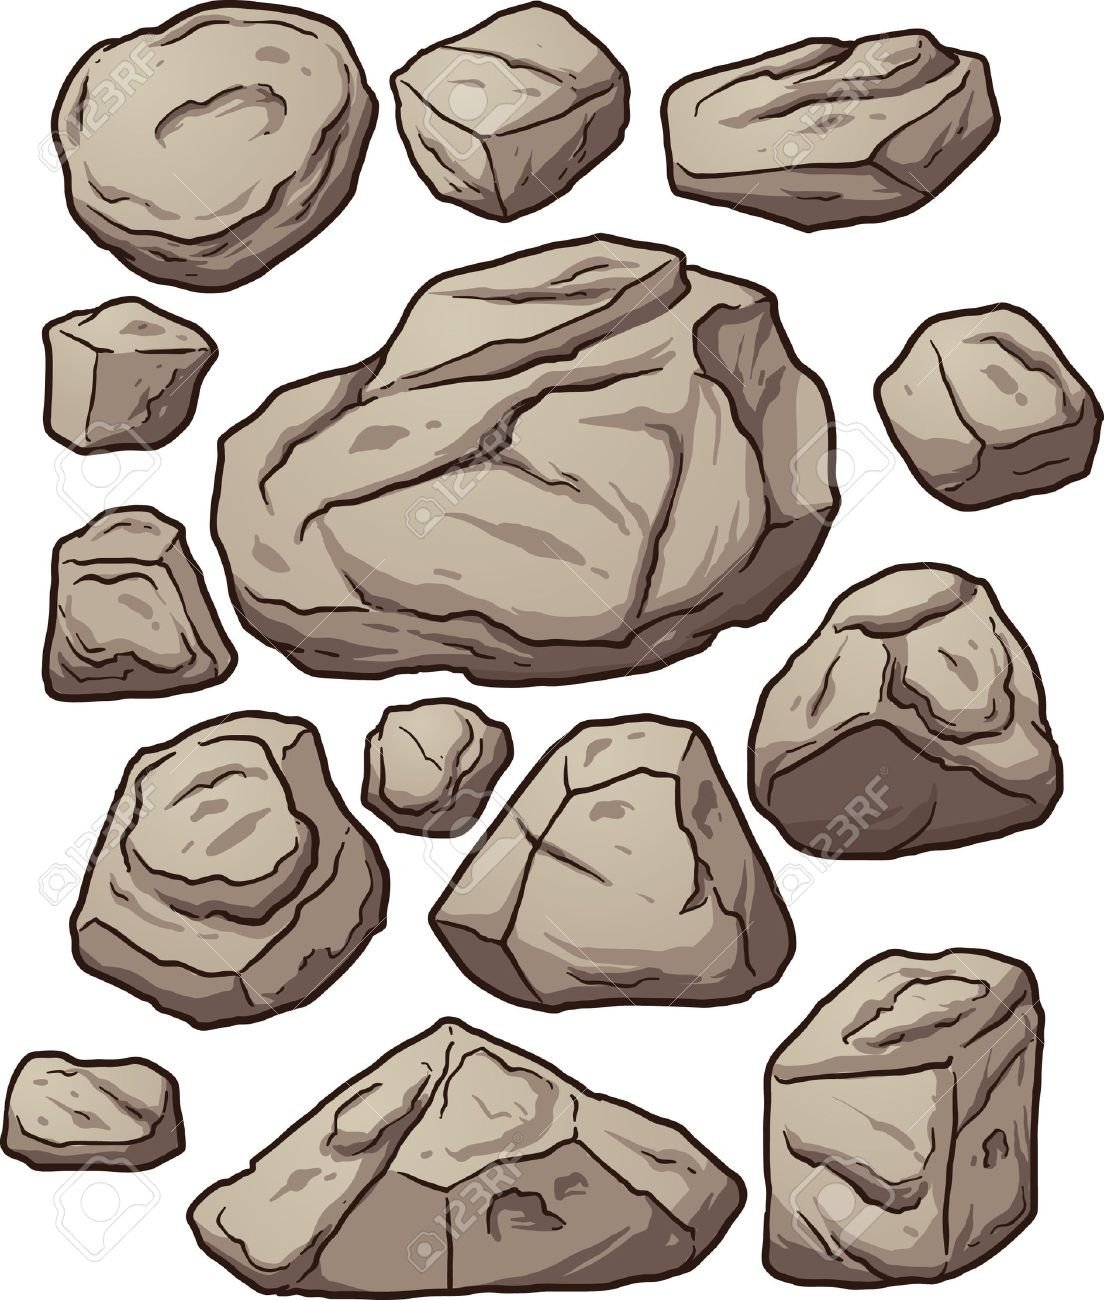 Камни в мультяшном стиле